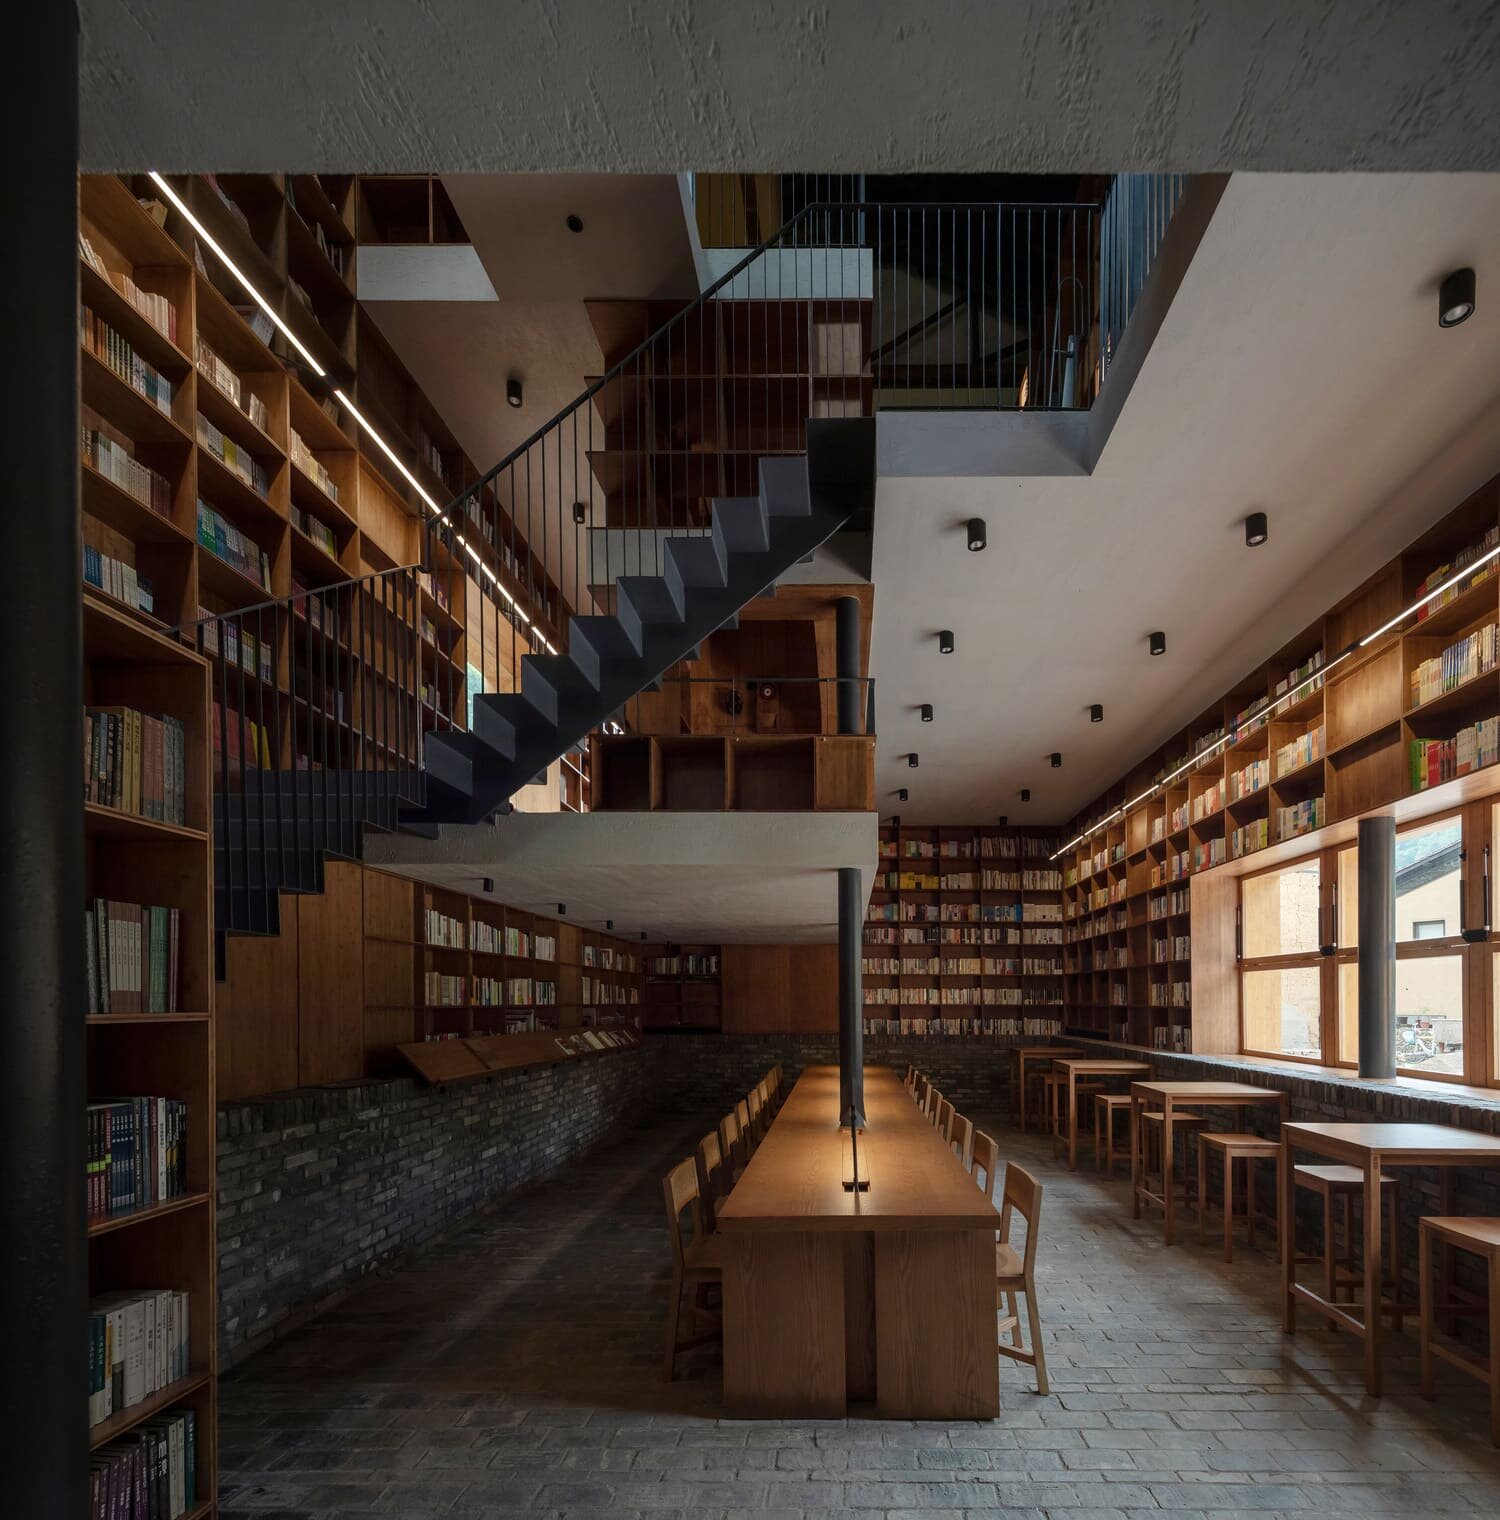 tao+c-Bookstore-Su Sheng Liang-Visual Atelier 8-Architecture-8.jpg